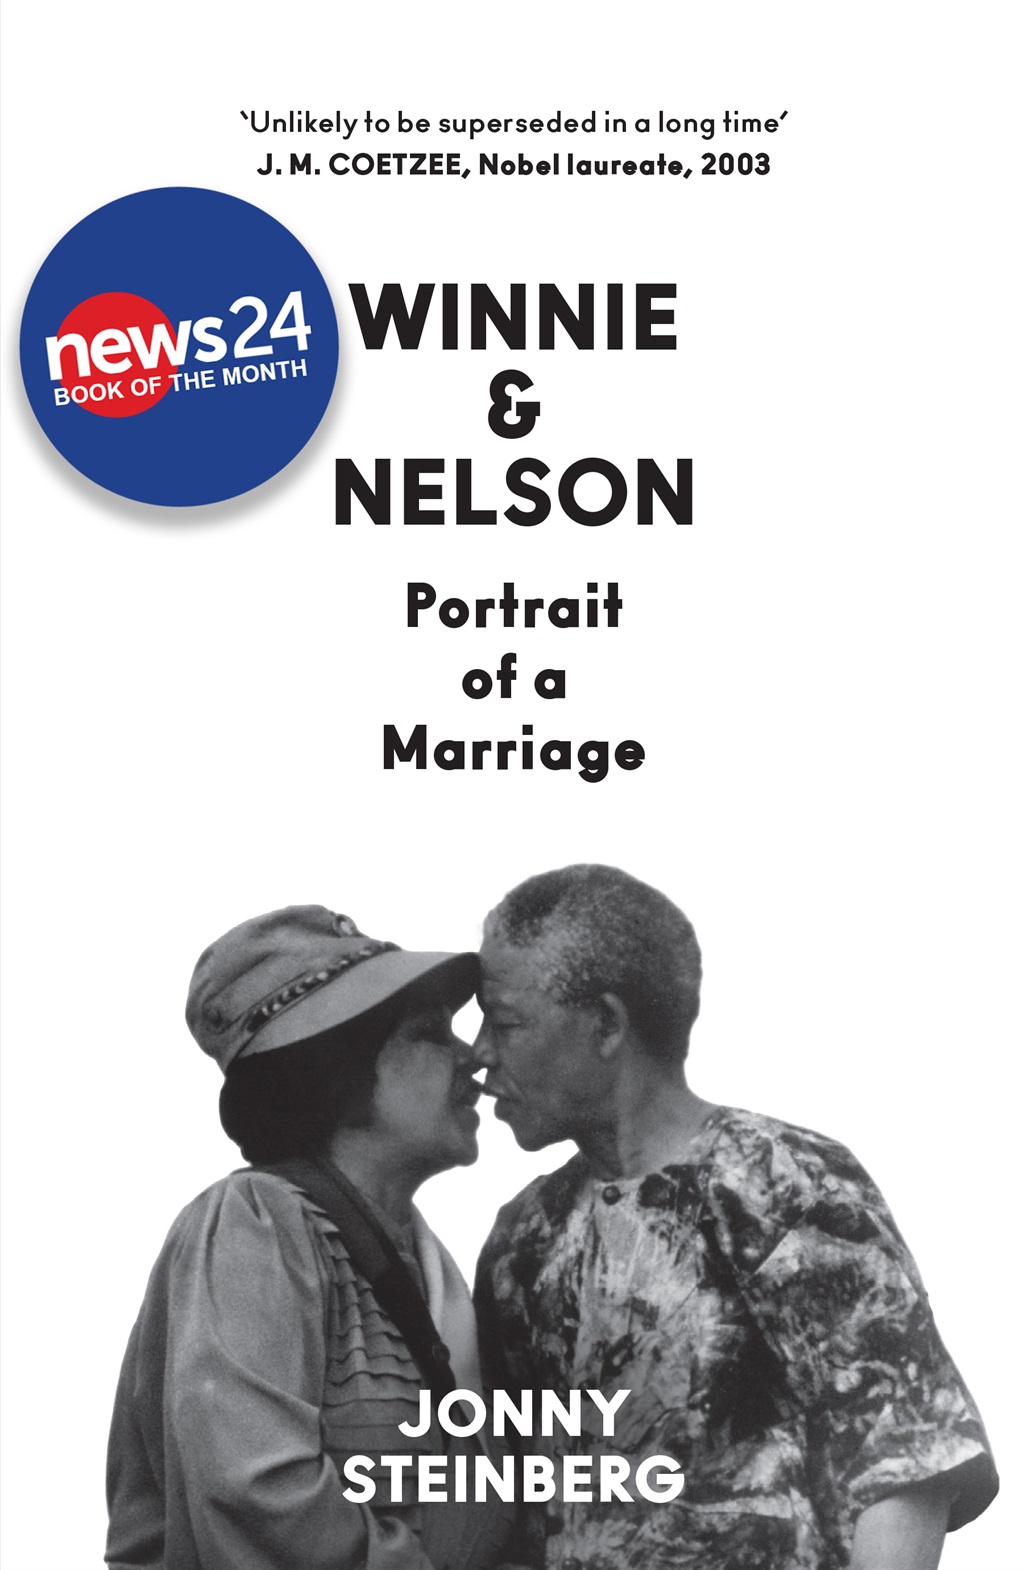 Winnie & Nelson: Portrait of a Marriage by Jonny Steinberg. (Jonathan Ball)